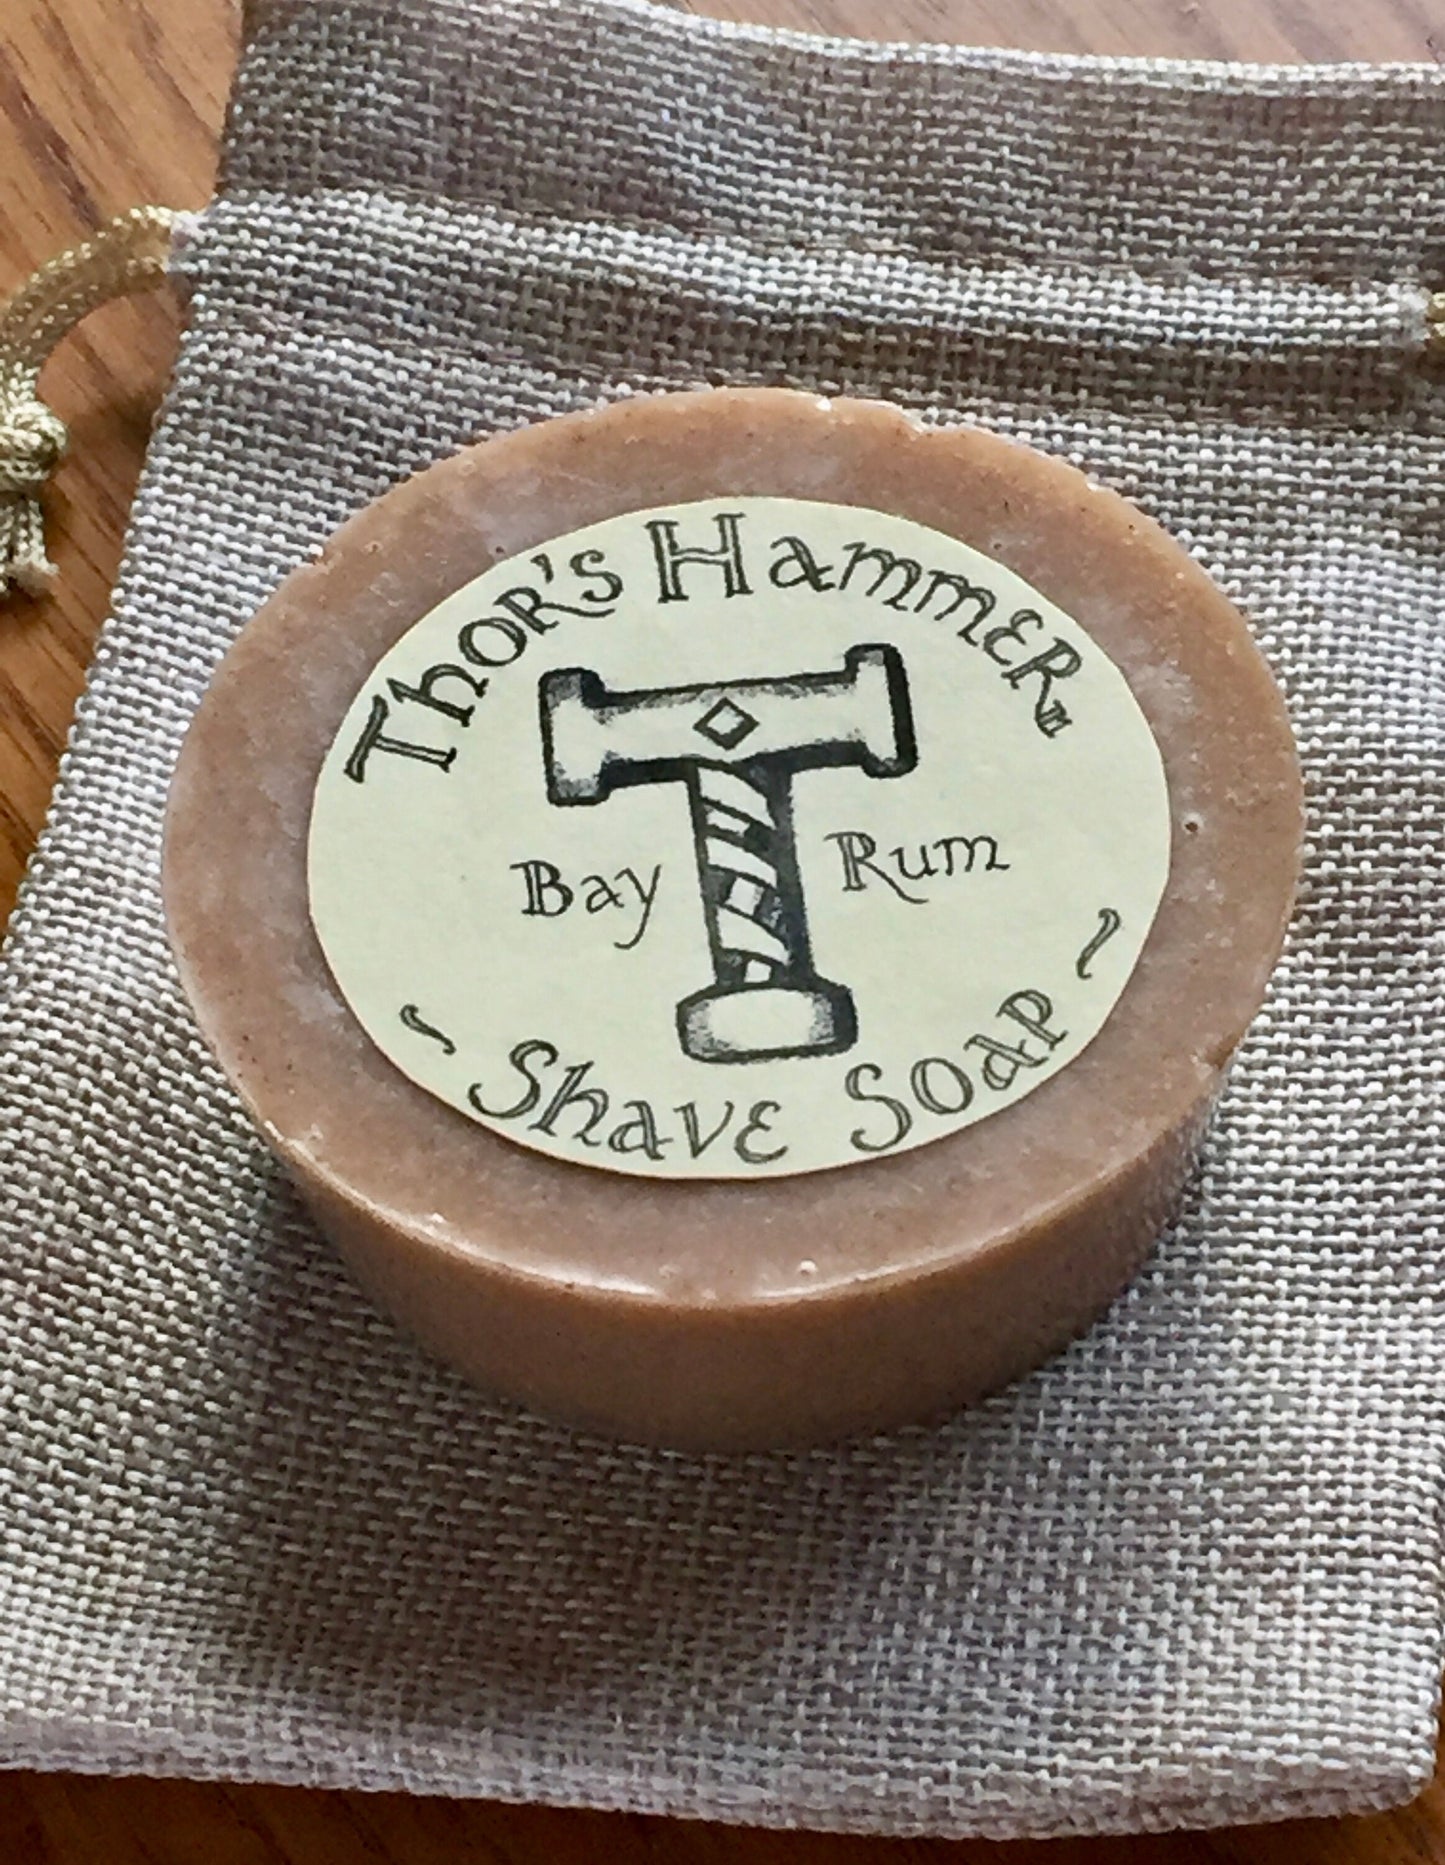 Bay Rum Shave Soap | Thor's Hammer Bay Rum Shaving Soap Puck | Wet Shave Soap | Viking Shave Soap | Organic Goat Milk & Bentonite Clay